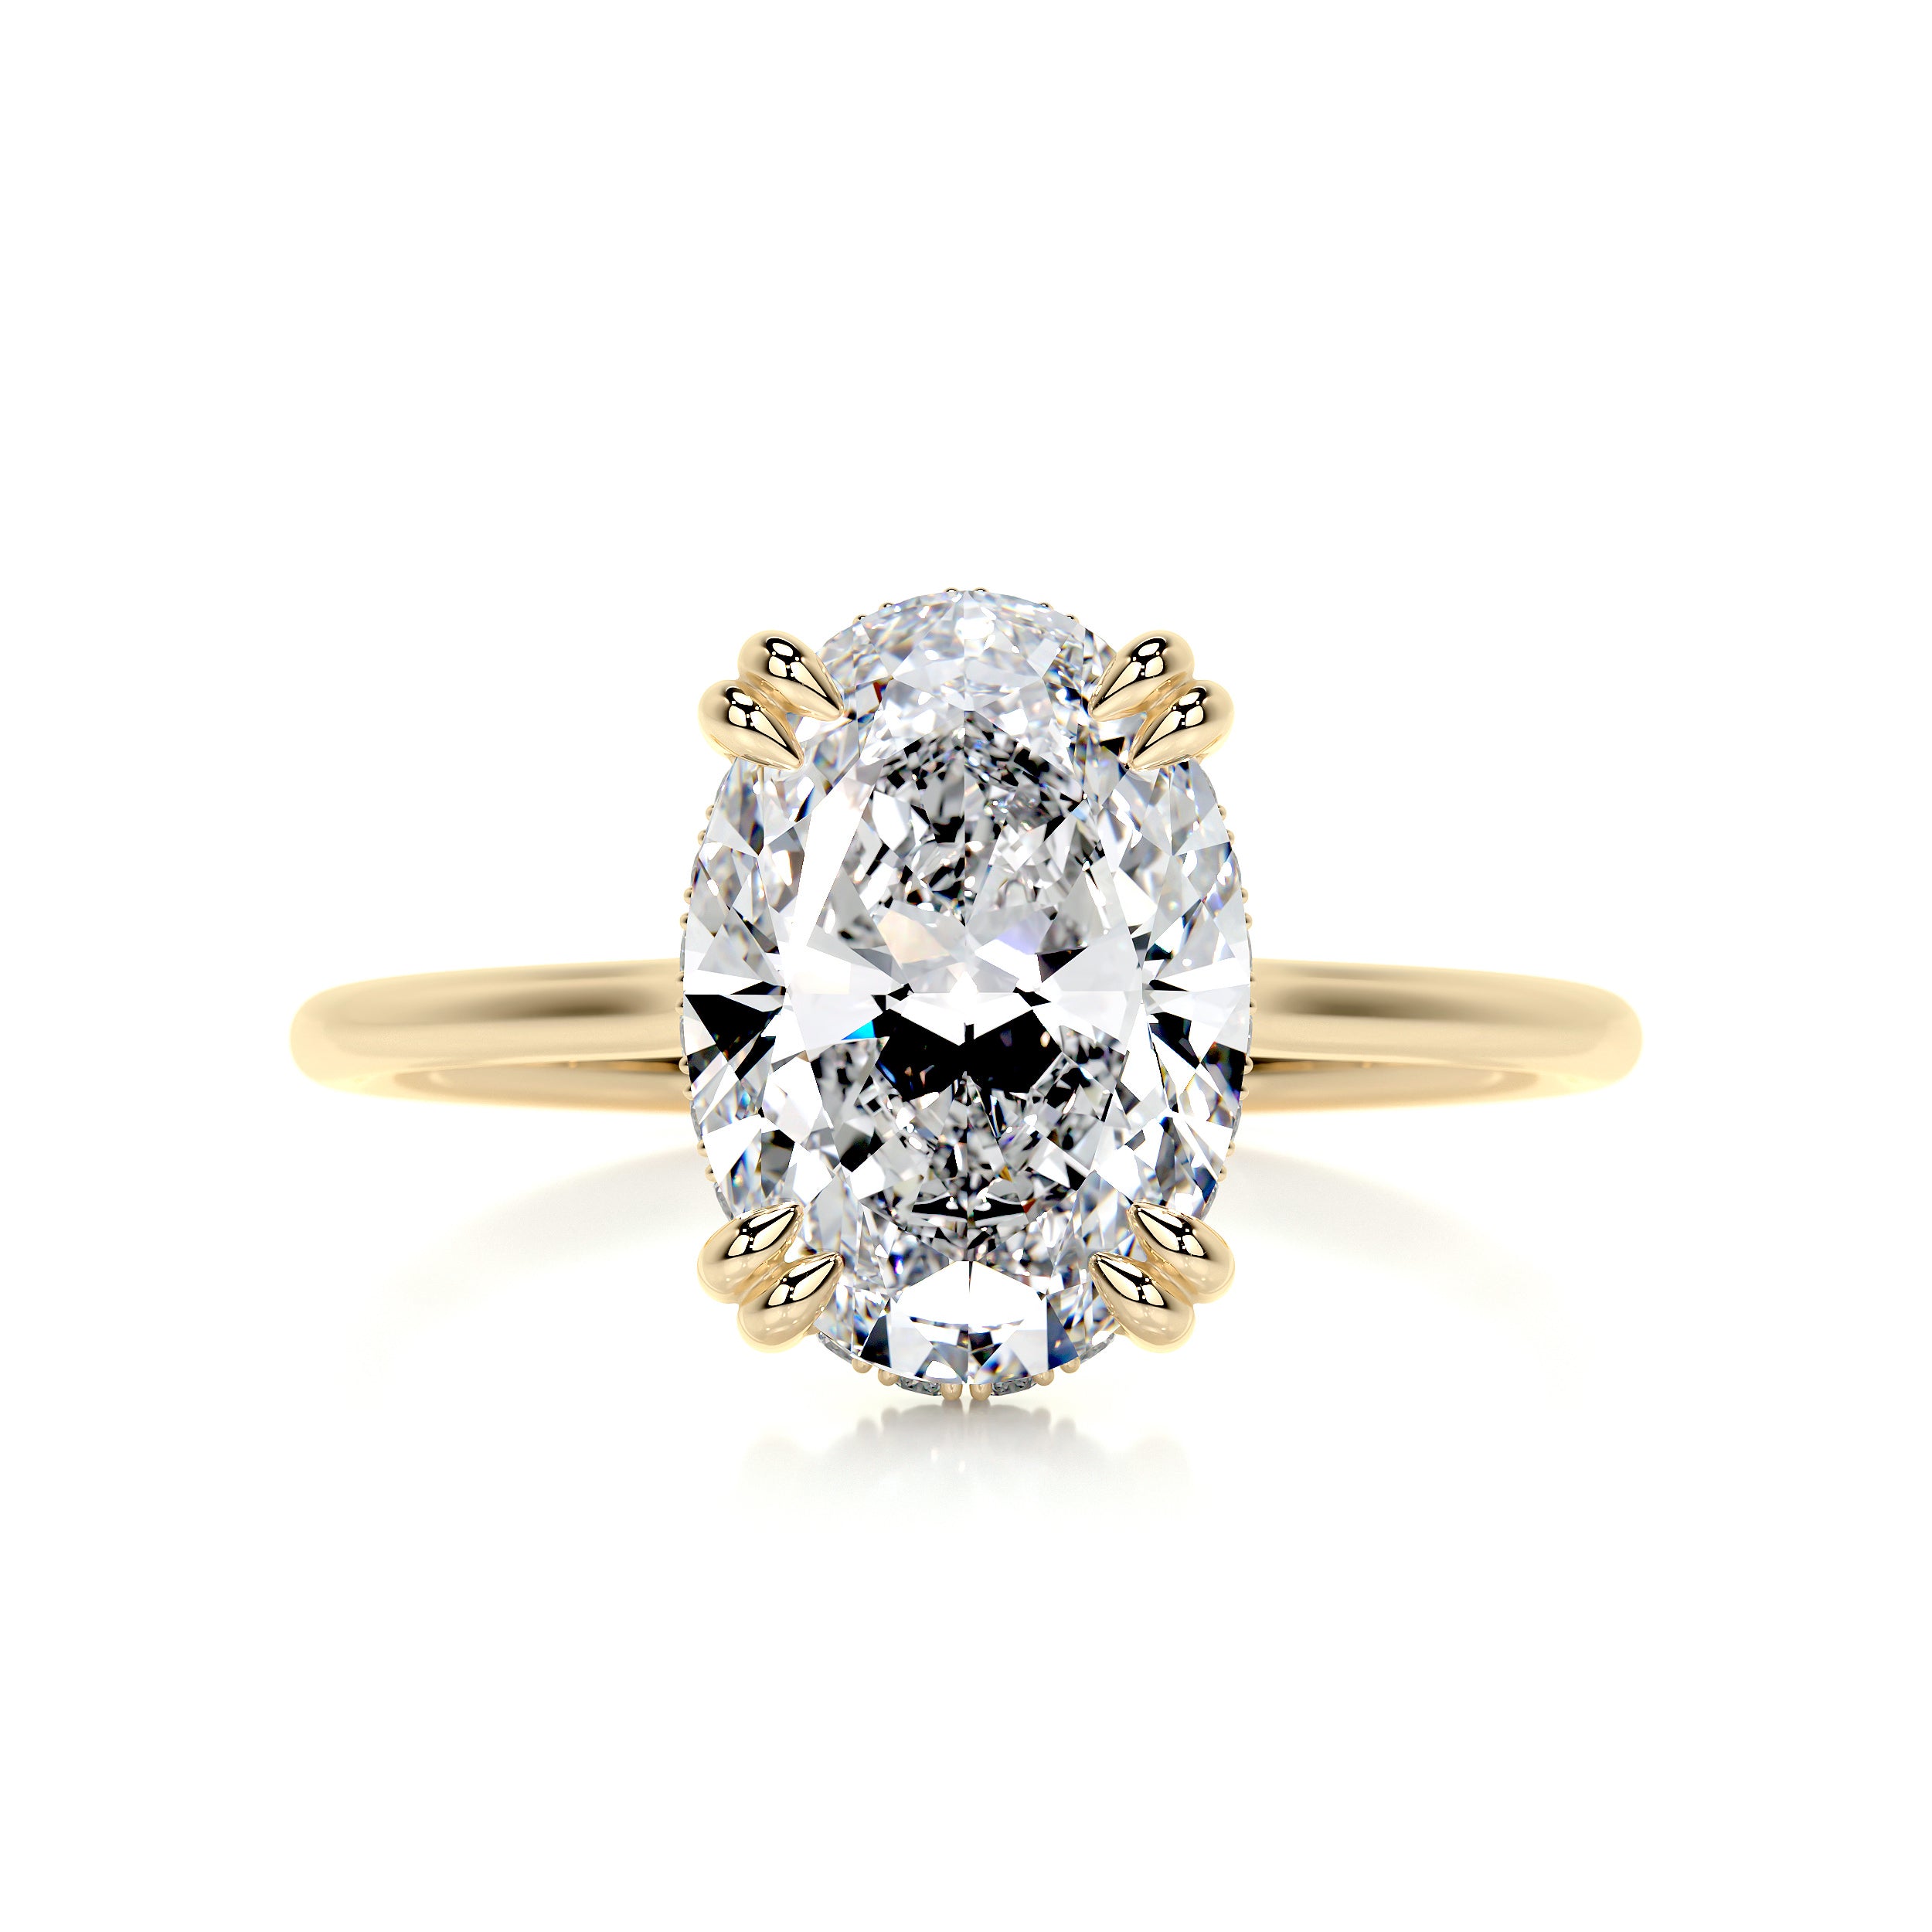 Harriet Diamond Engagement Ring   (3.1 Carat) -18K Yellow Gold